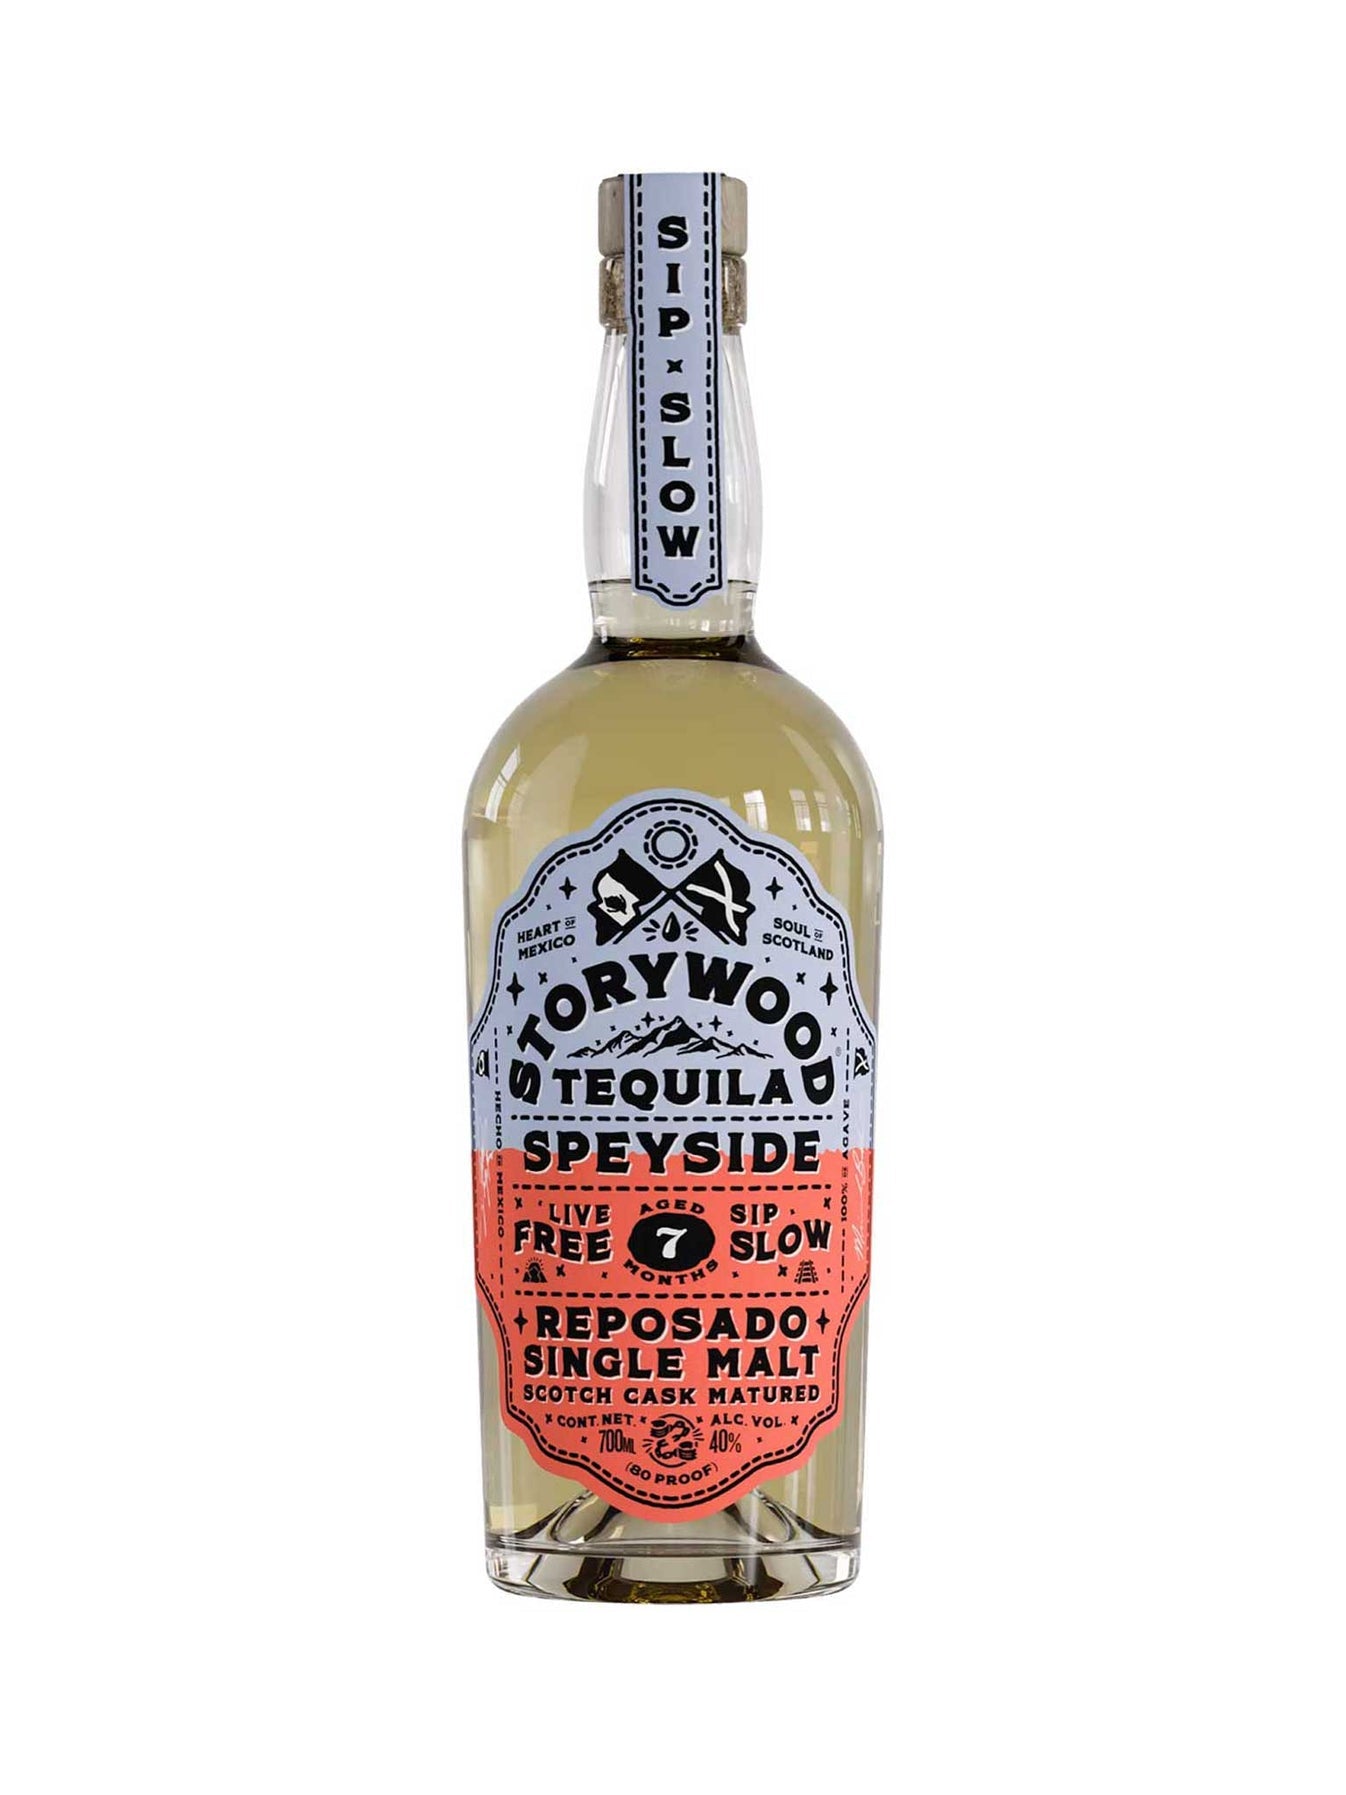 Storywood Reposado Speysize 7 Tequila 750mL